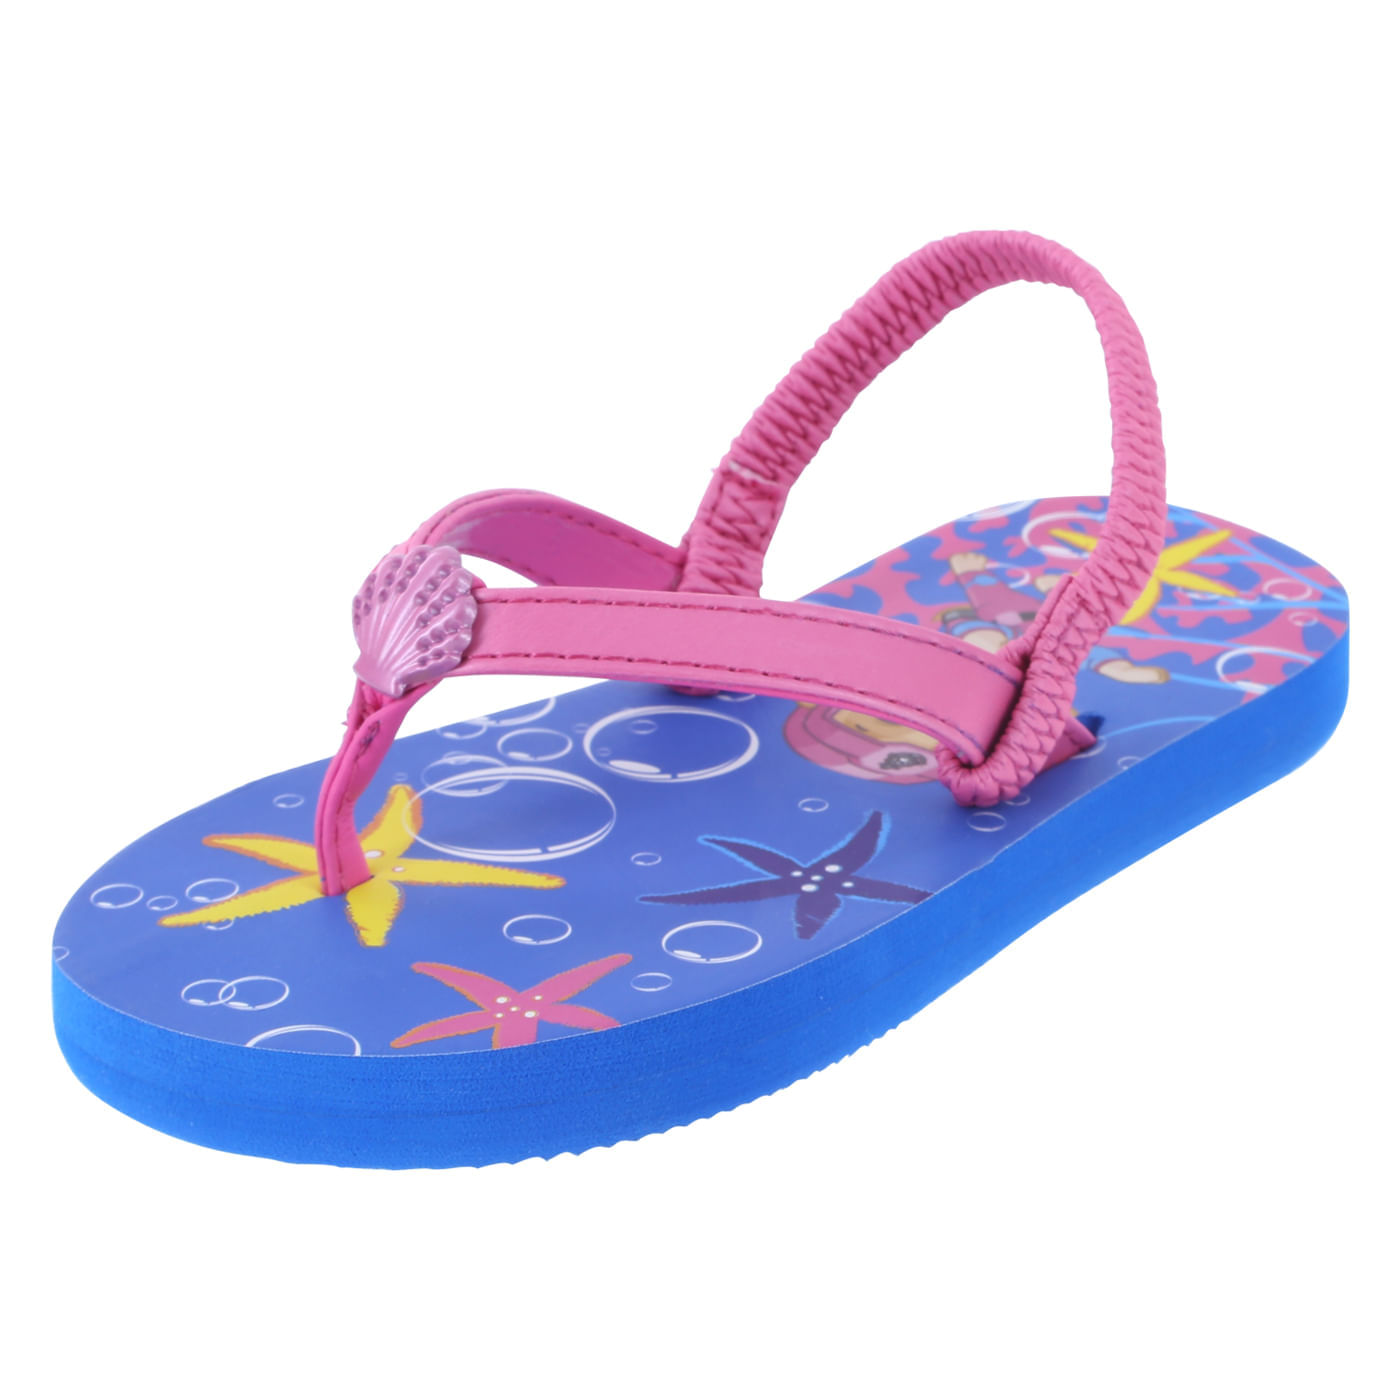 Nickelodeon Toddler Girls Shell Sandal | Sandals - Payless